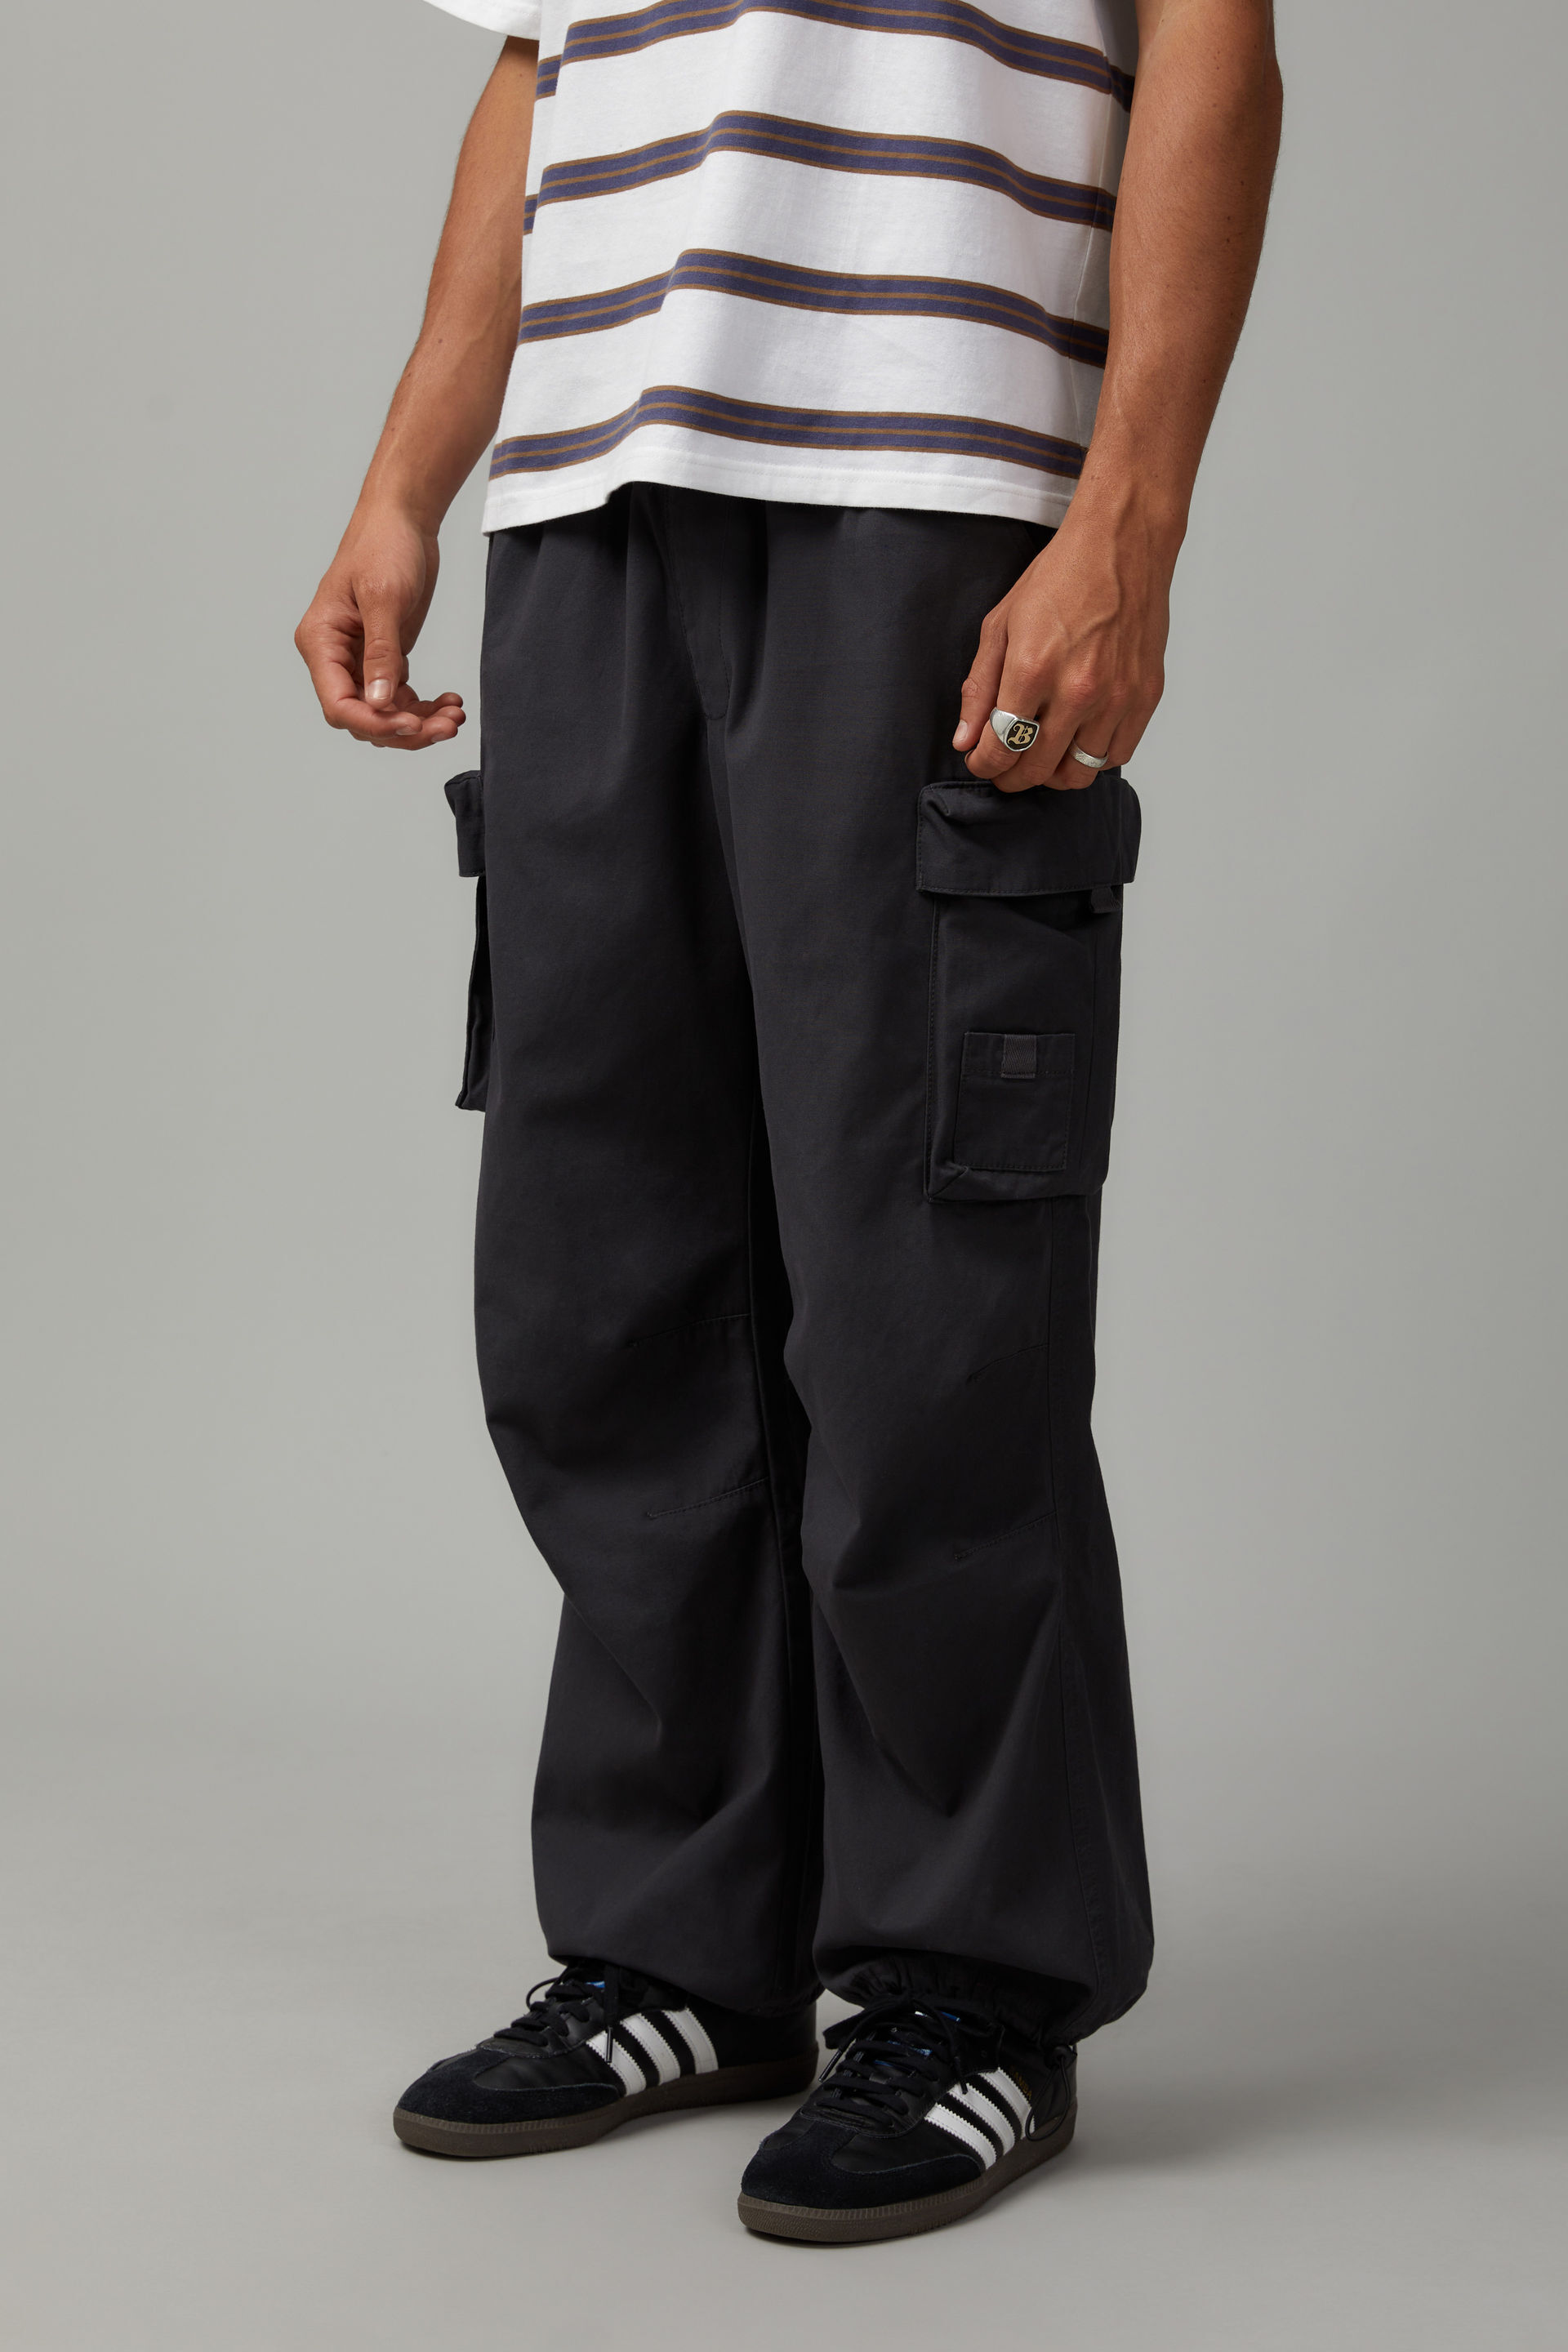 2021 Stylish simplicity Men Half Pants Fashion Zipper Multi-pocket Cargo  Shorts Man Leisure Drawstring All-match Beach Shorts